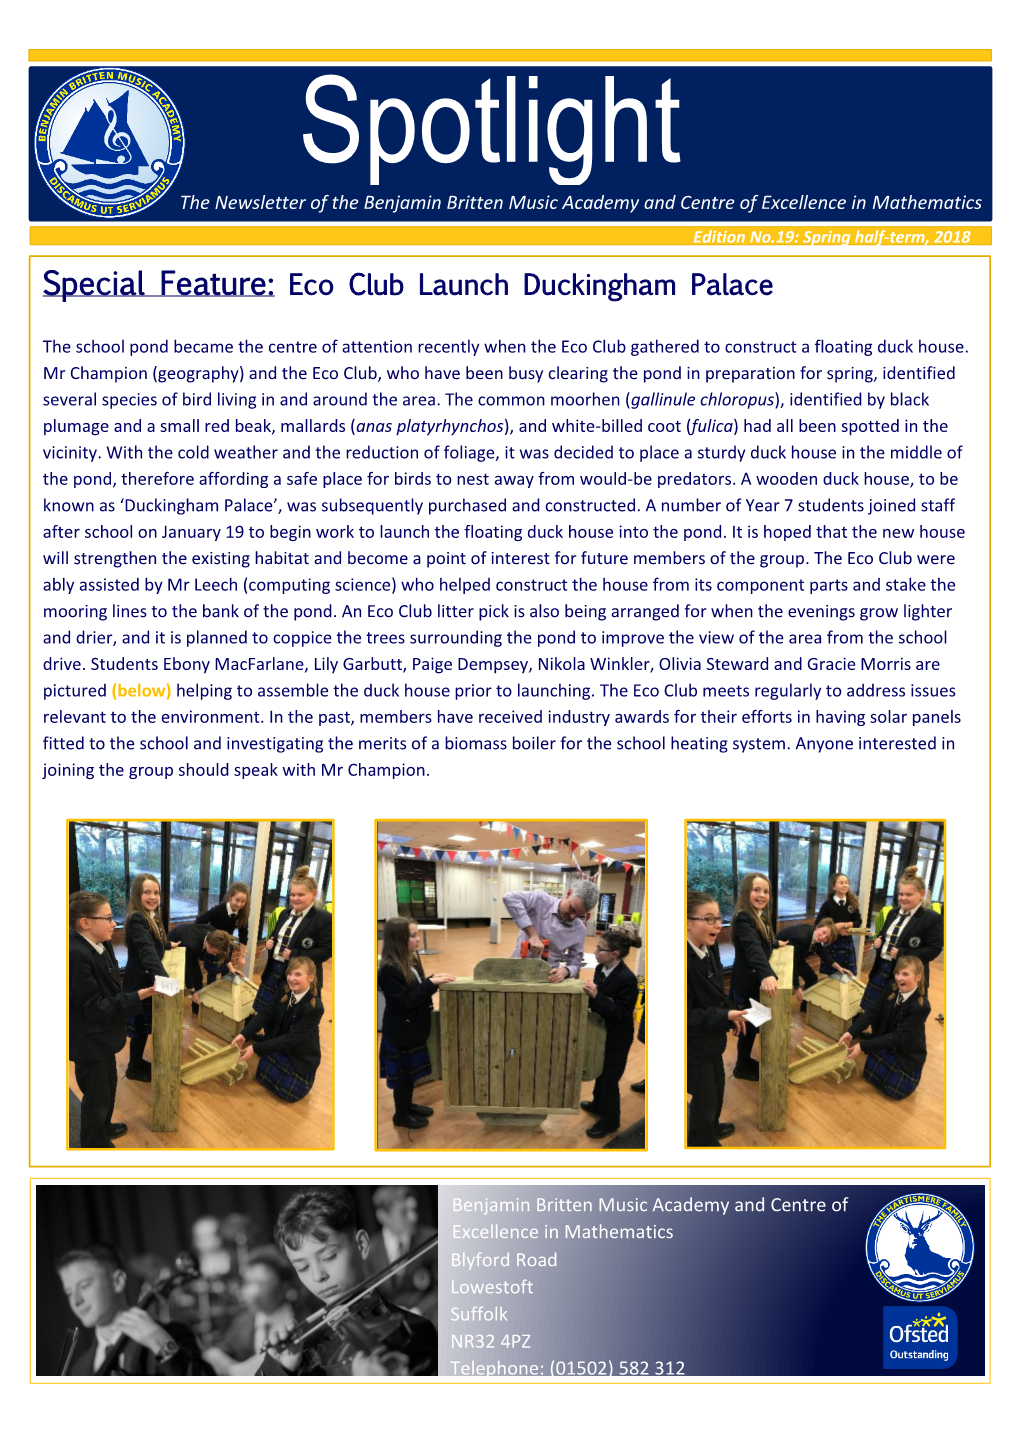 Eco Club Launch Duckingham Palace